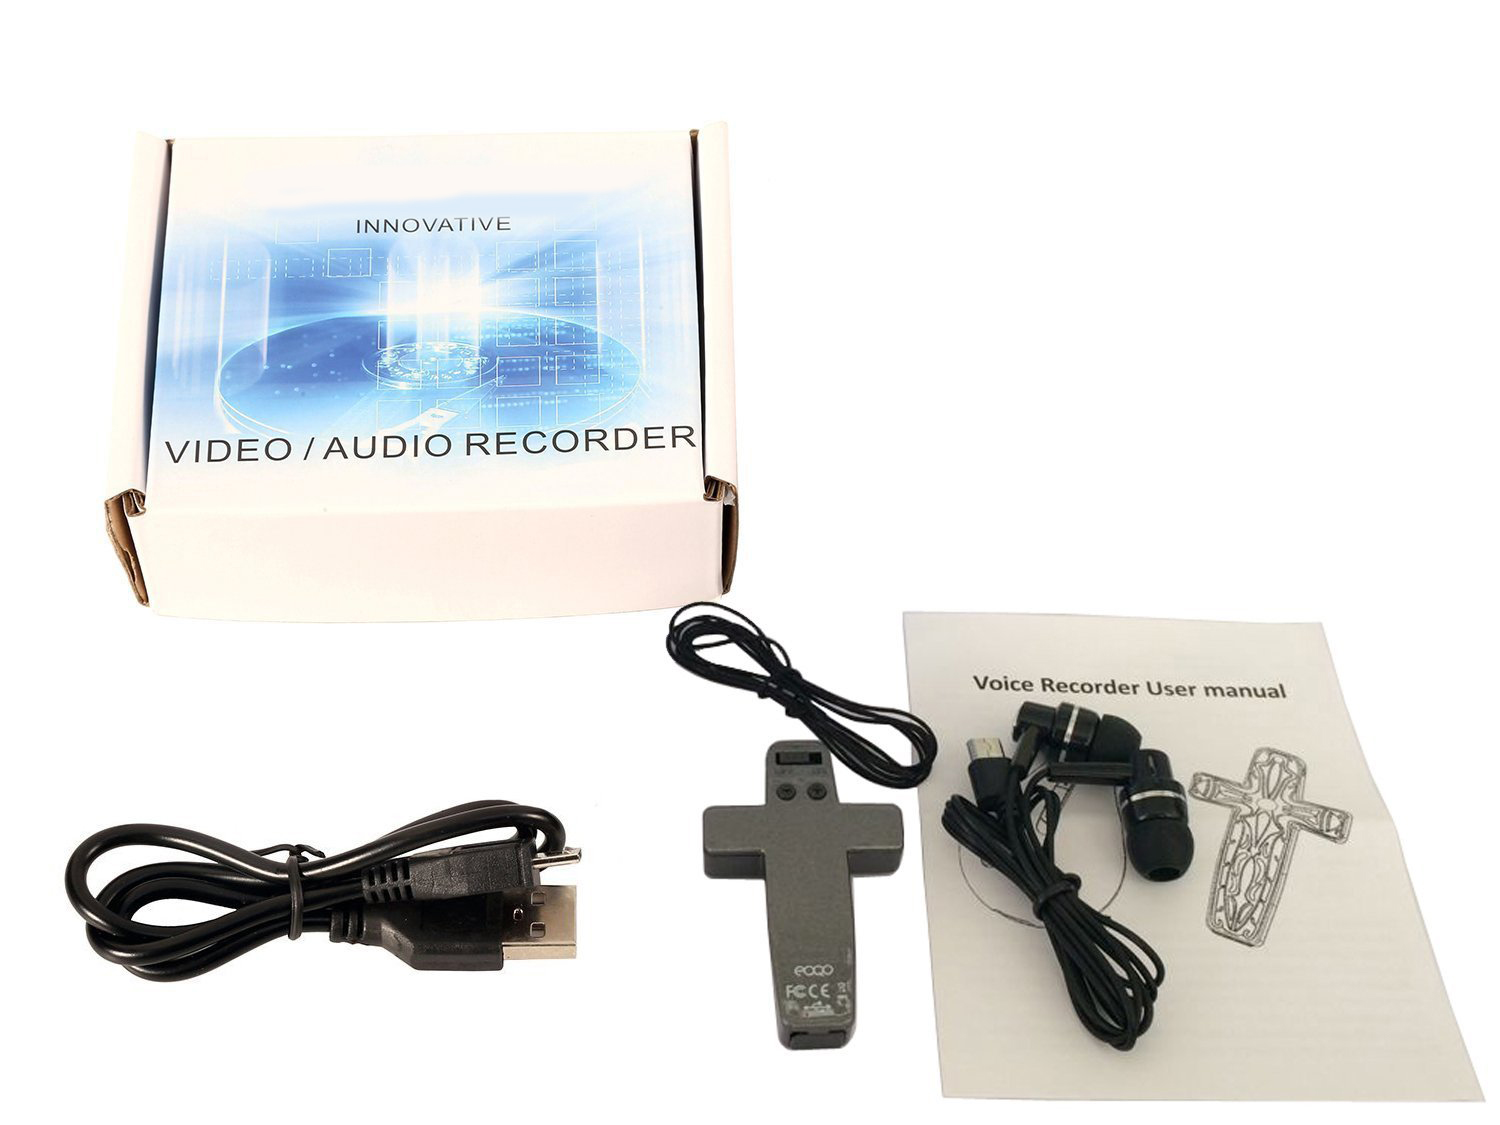 VR06 Cross Digital Voice Recorder Necklace Style Voice/Audio Recorder USB Flash Driver MP3 Player Via Earphone 8GB Audio Recorder